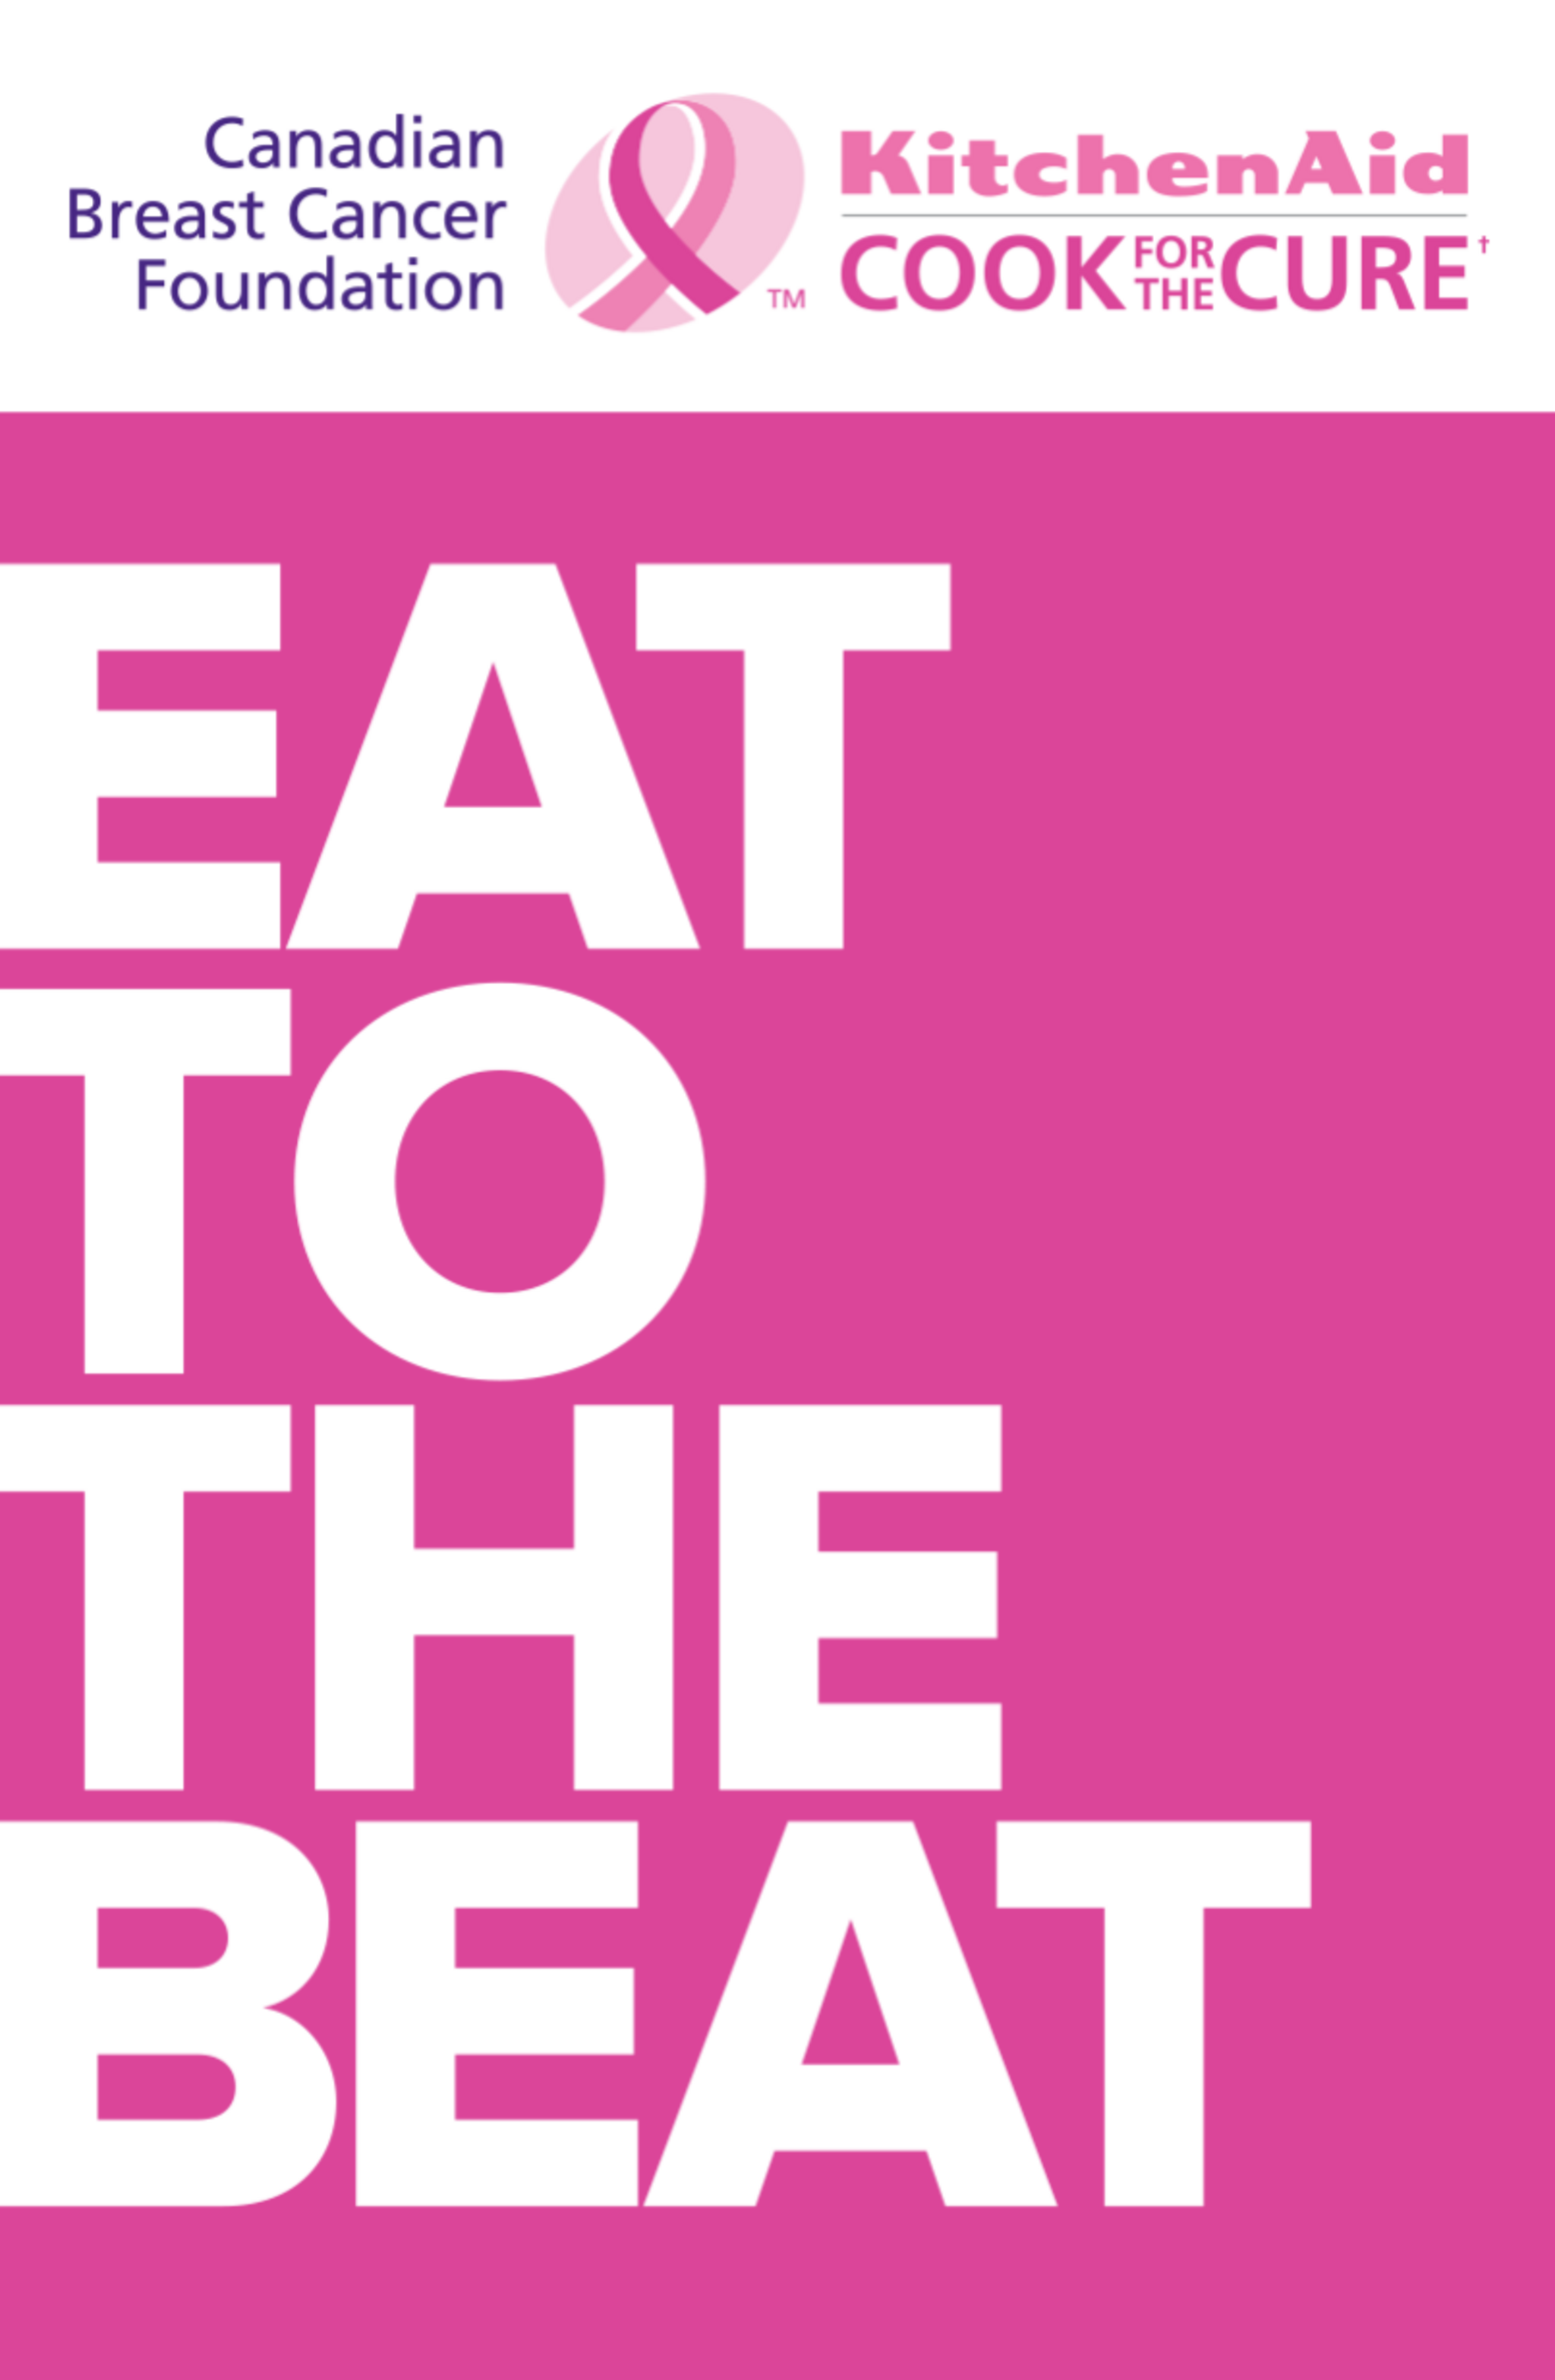 Eat beat